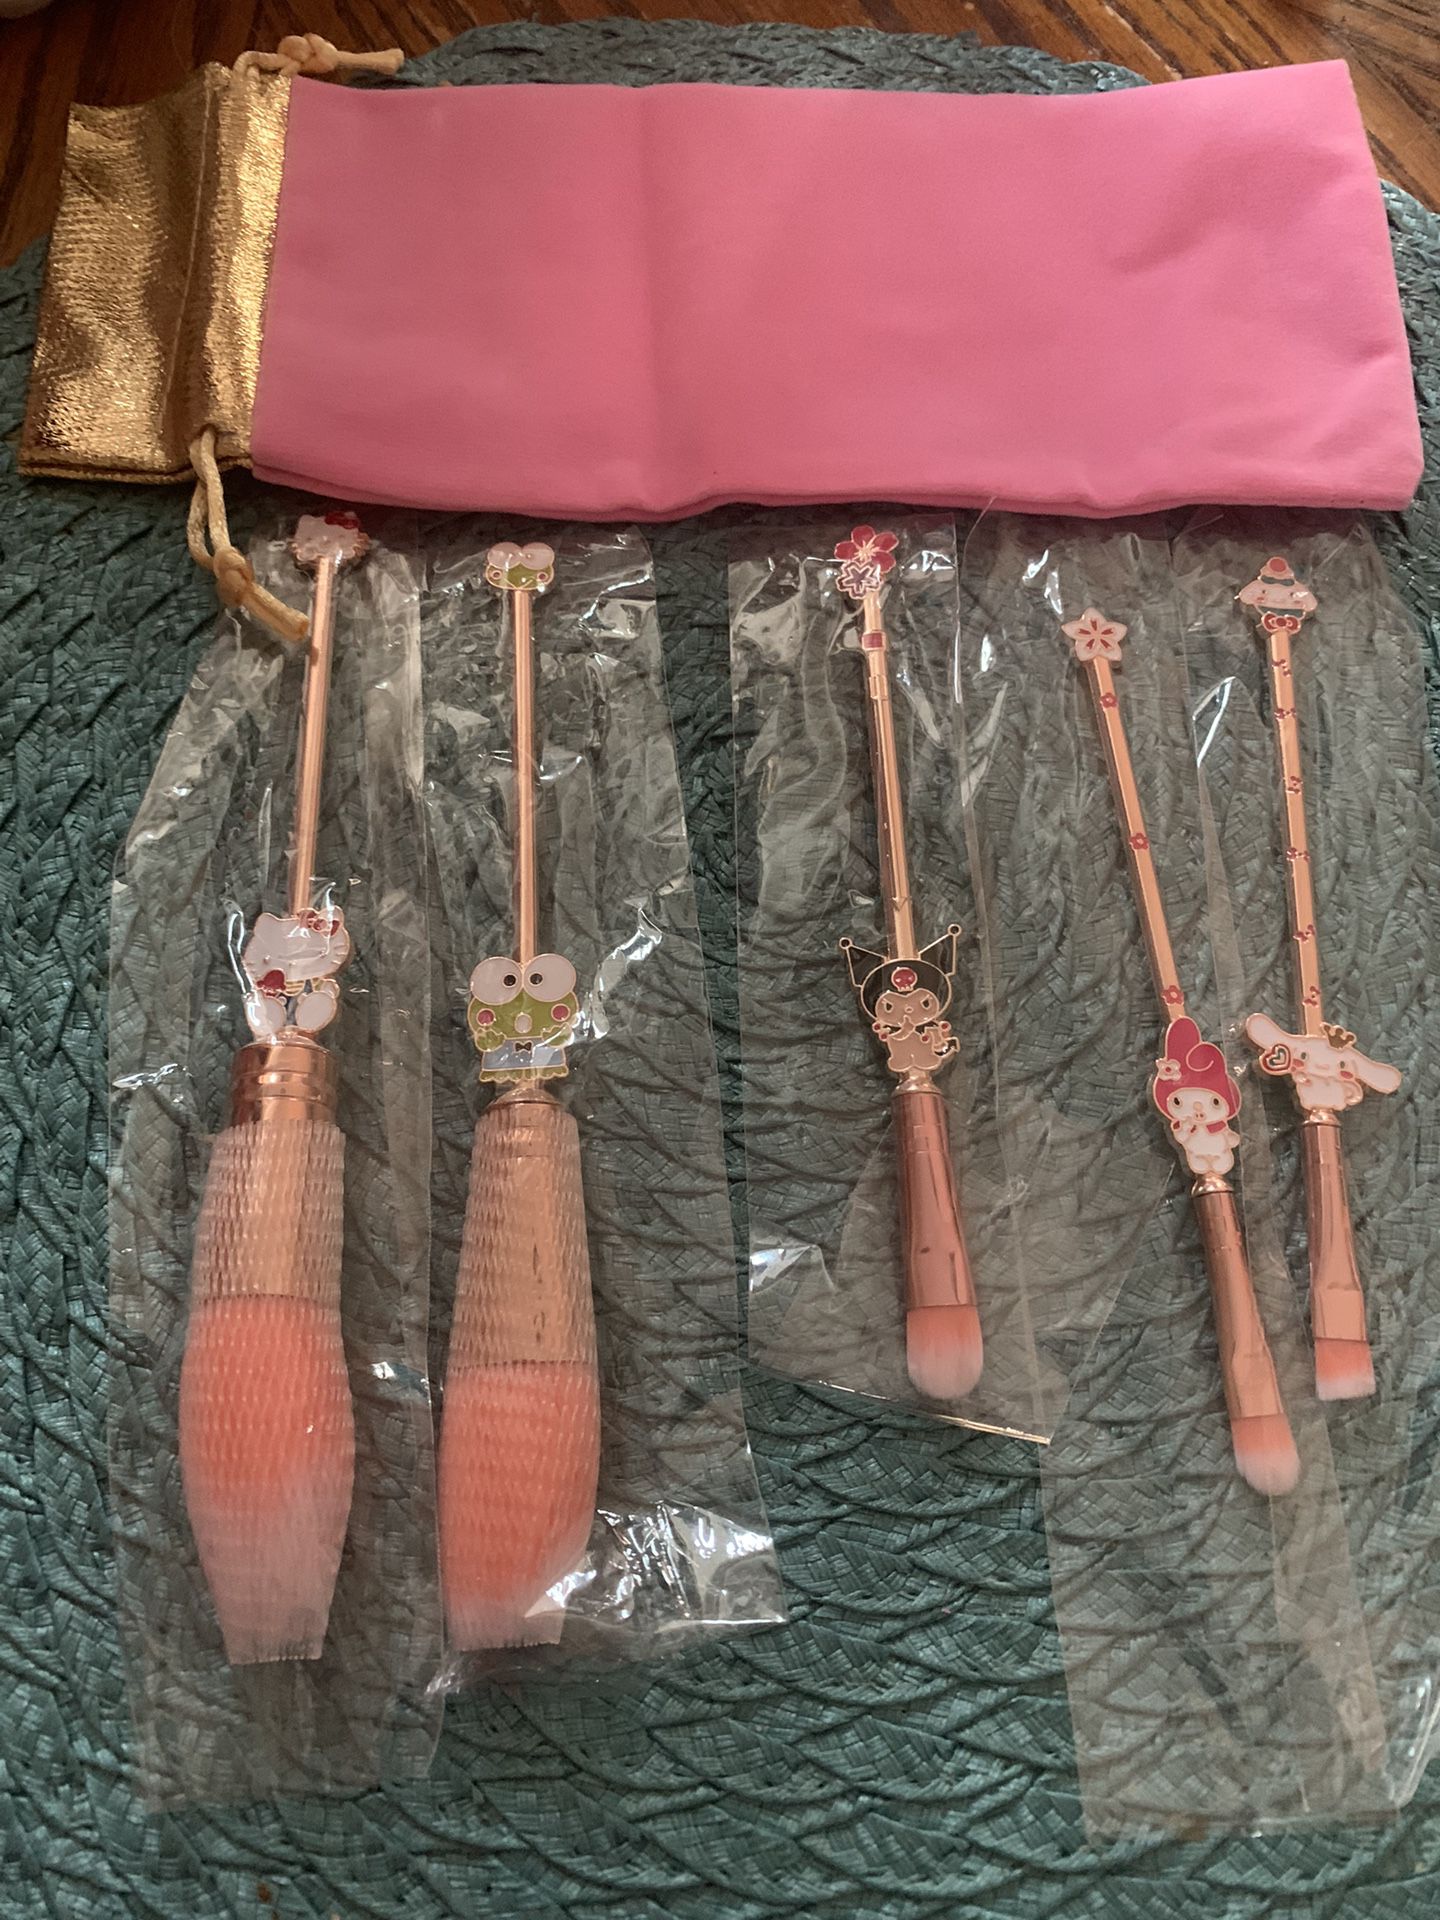 Hello Kitty Makeup Brushes Set